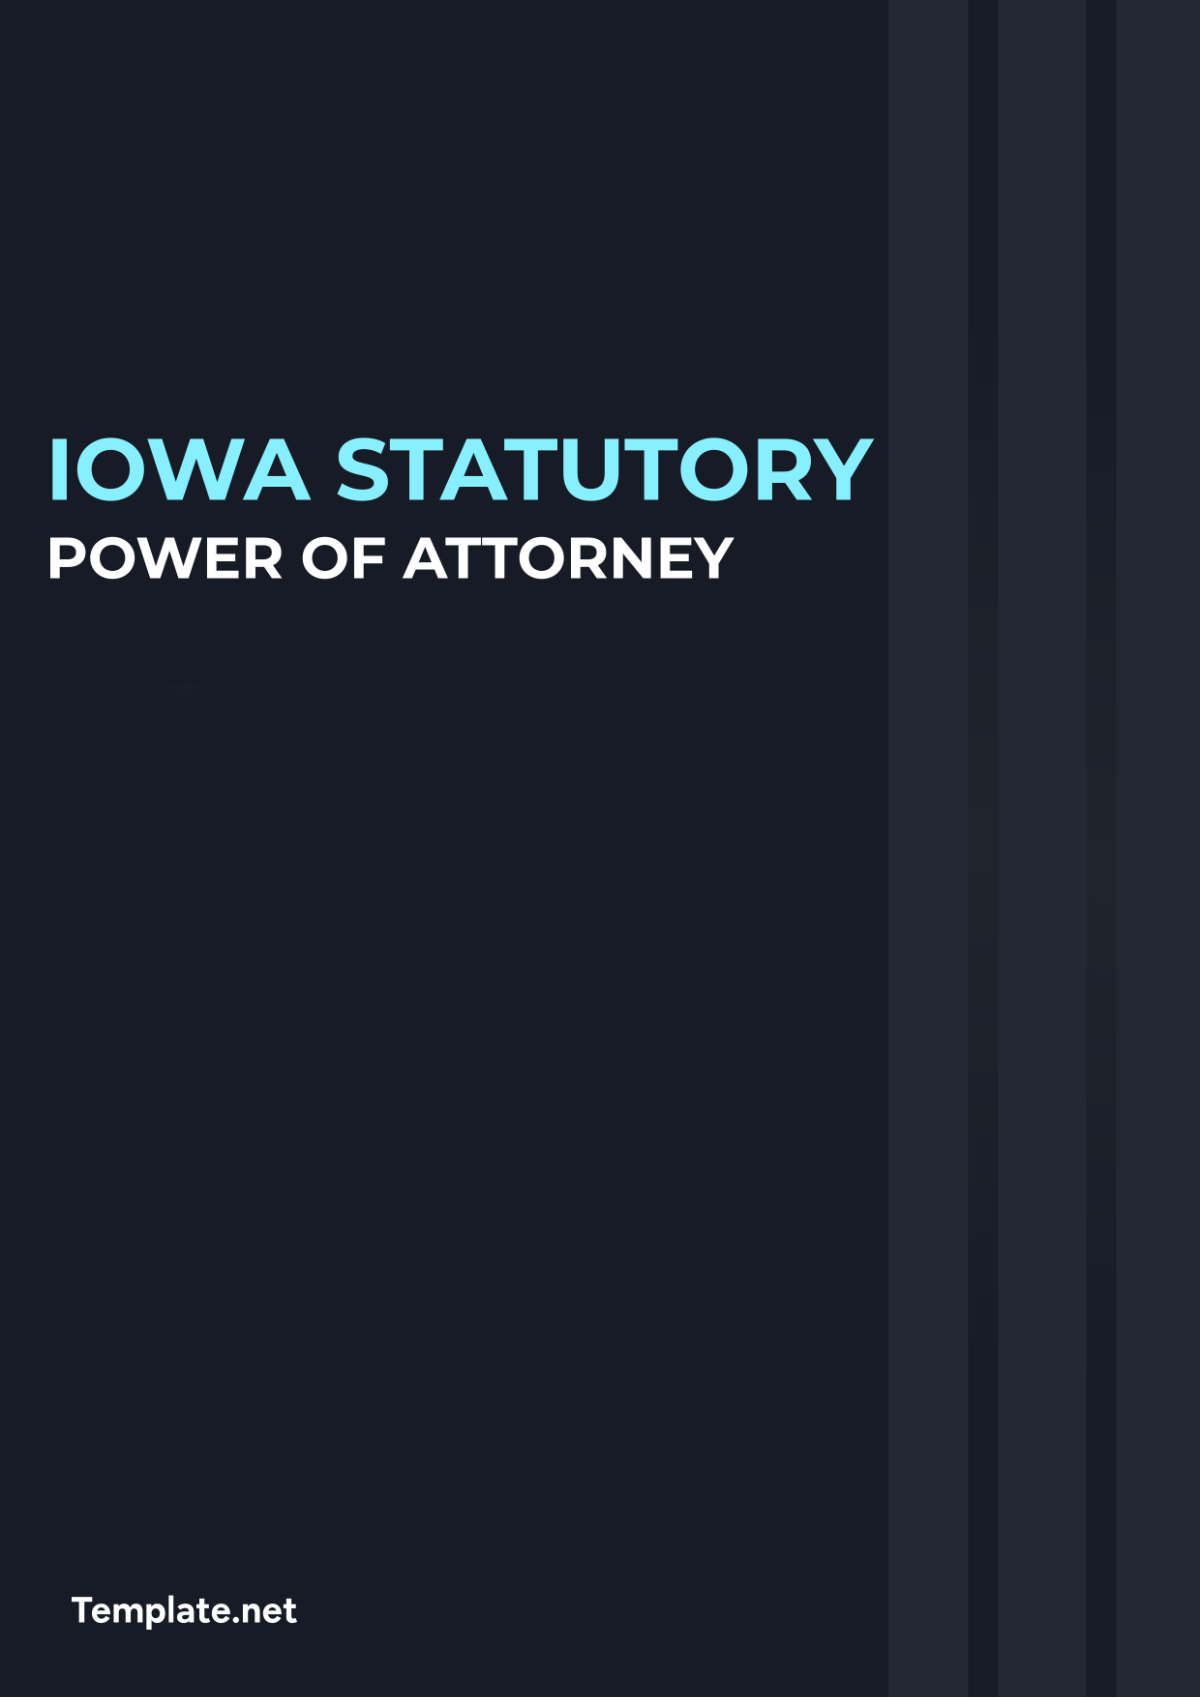 Iowa Statutory Power of Attorney Template